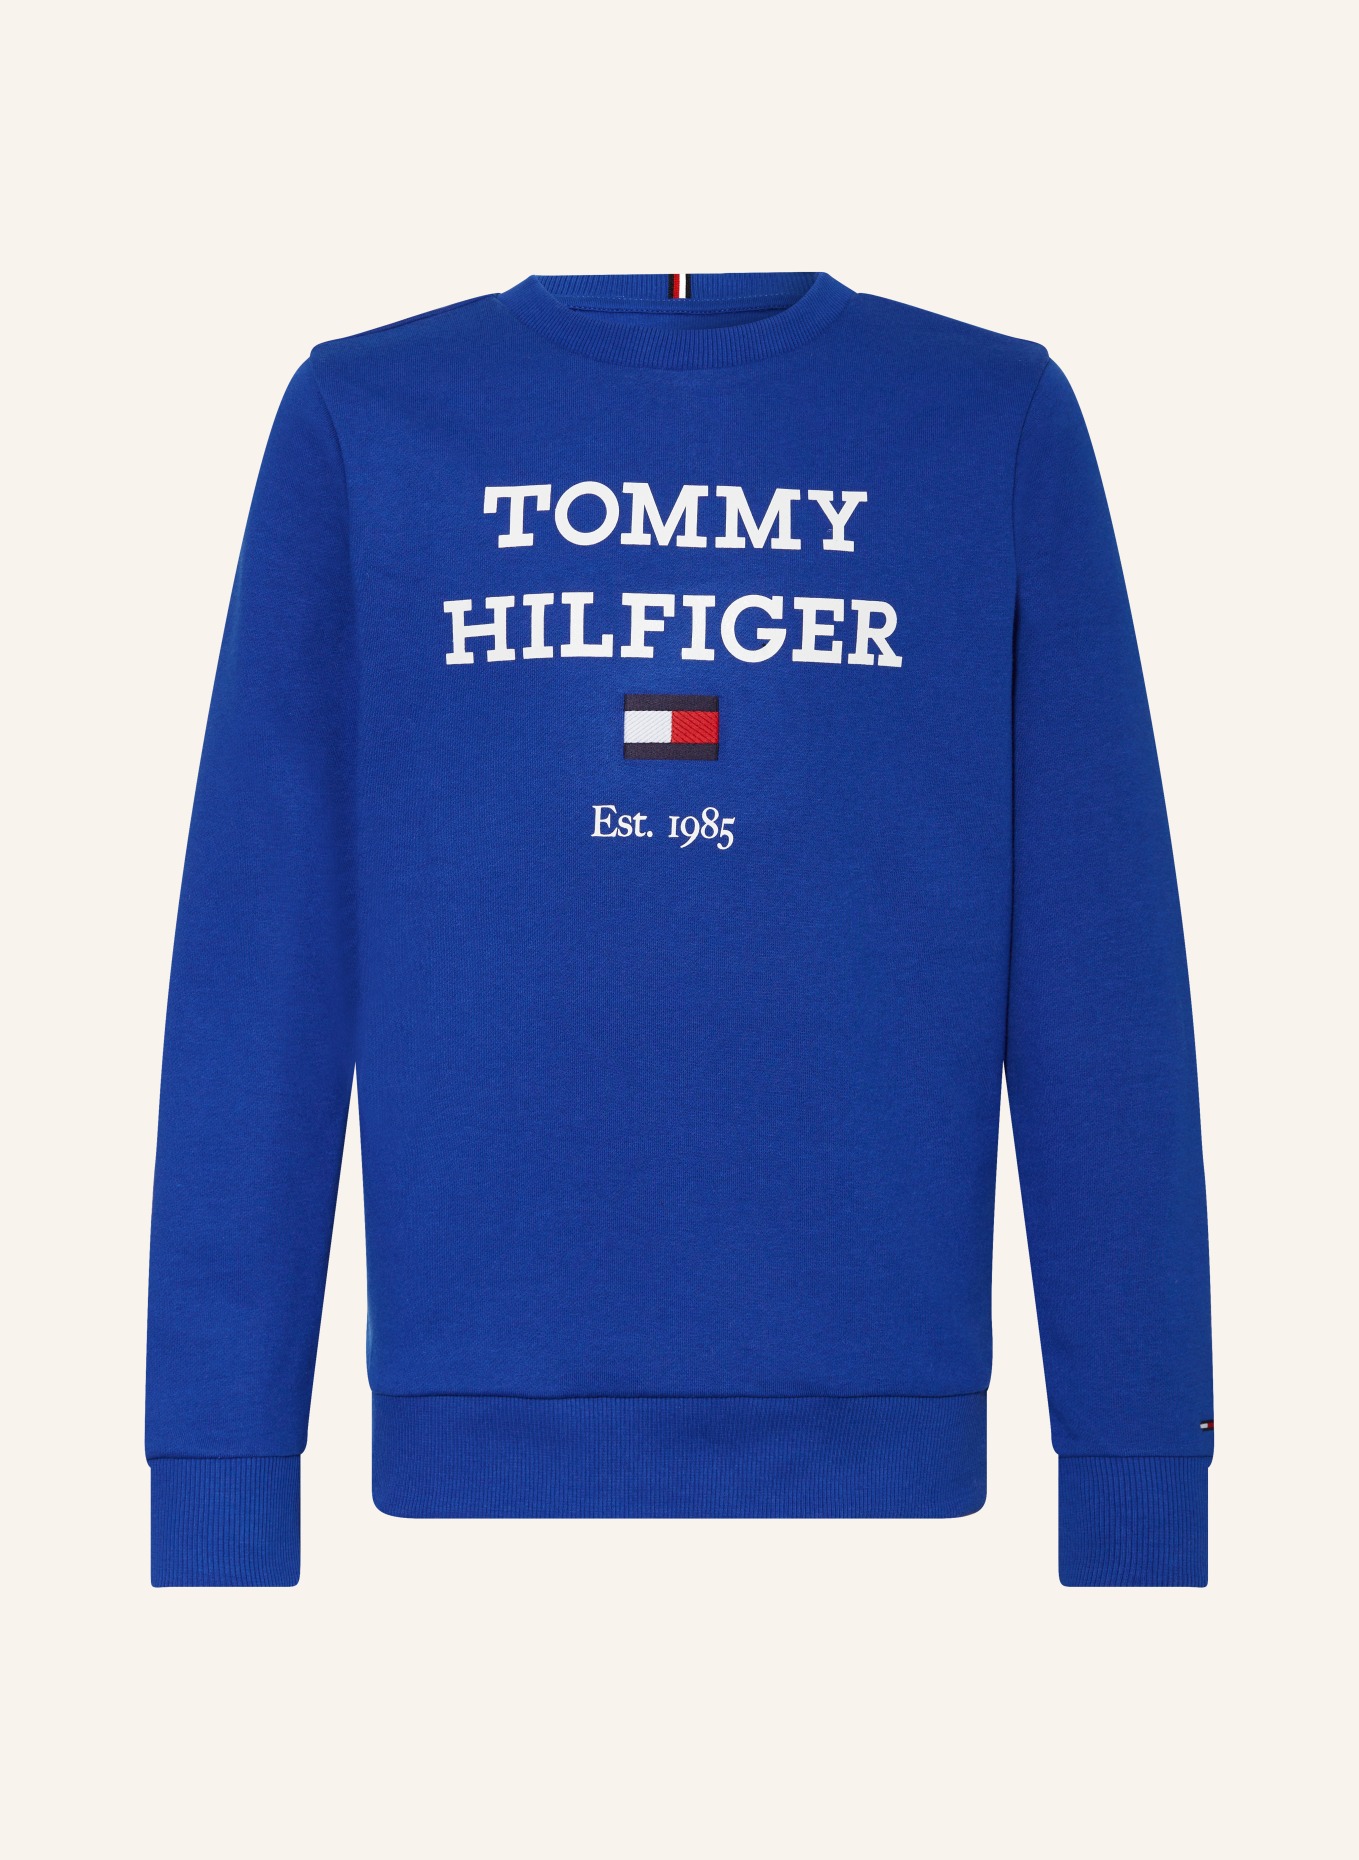 TOMMY HILFIGER Sweatshirt, Farbe: BLAU (Bild 1)